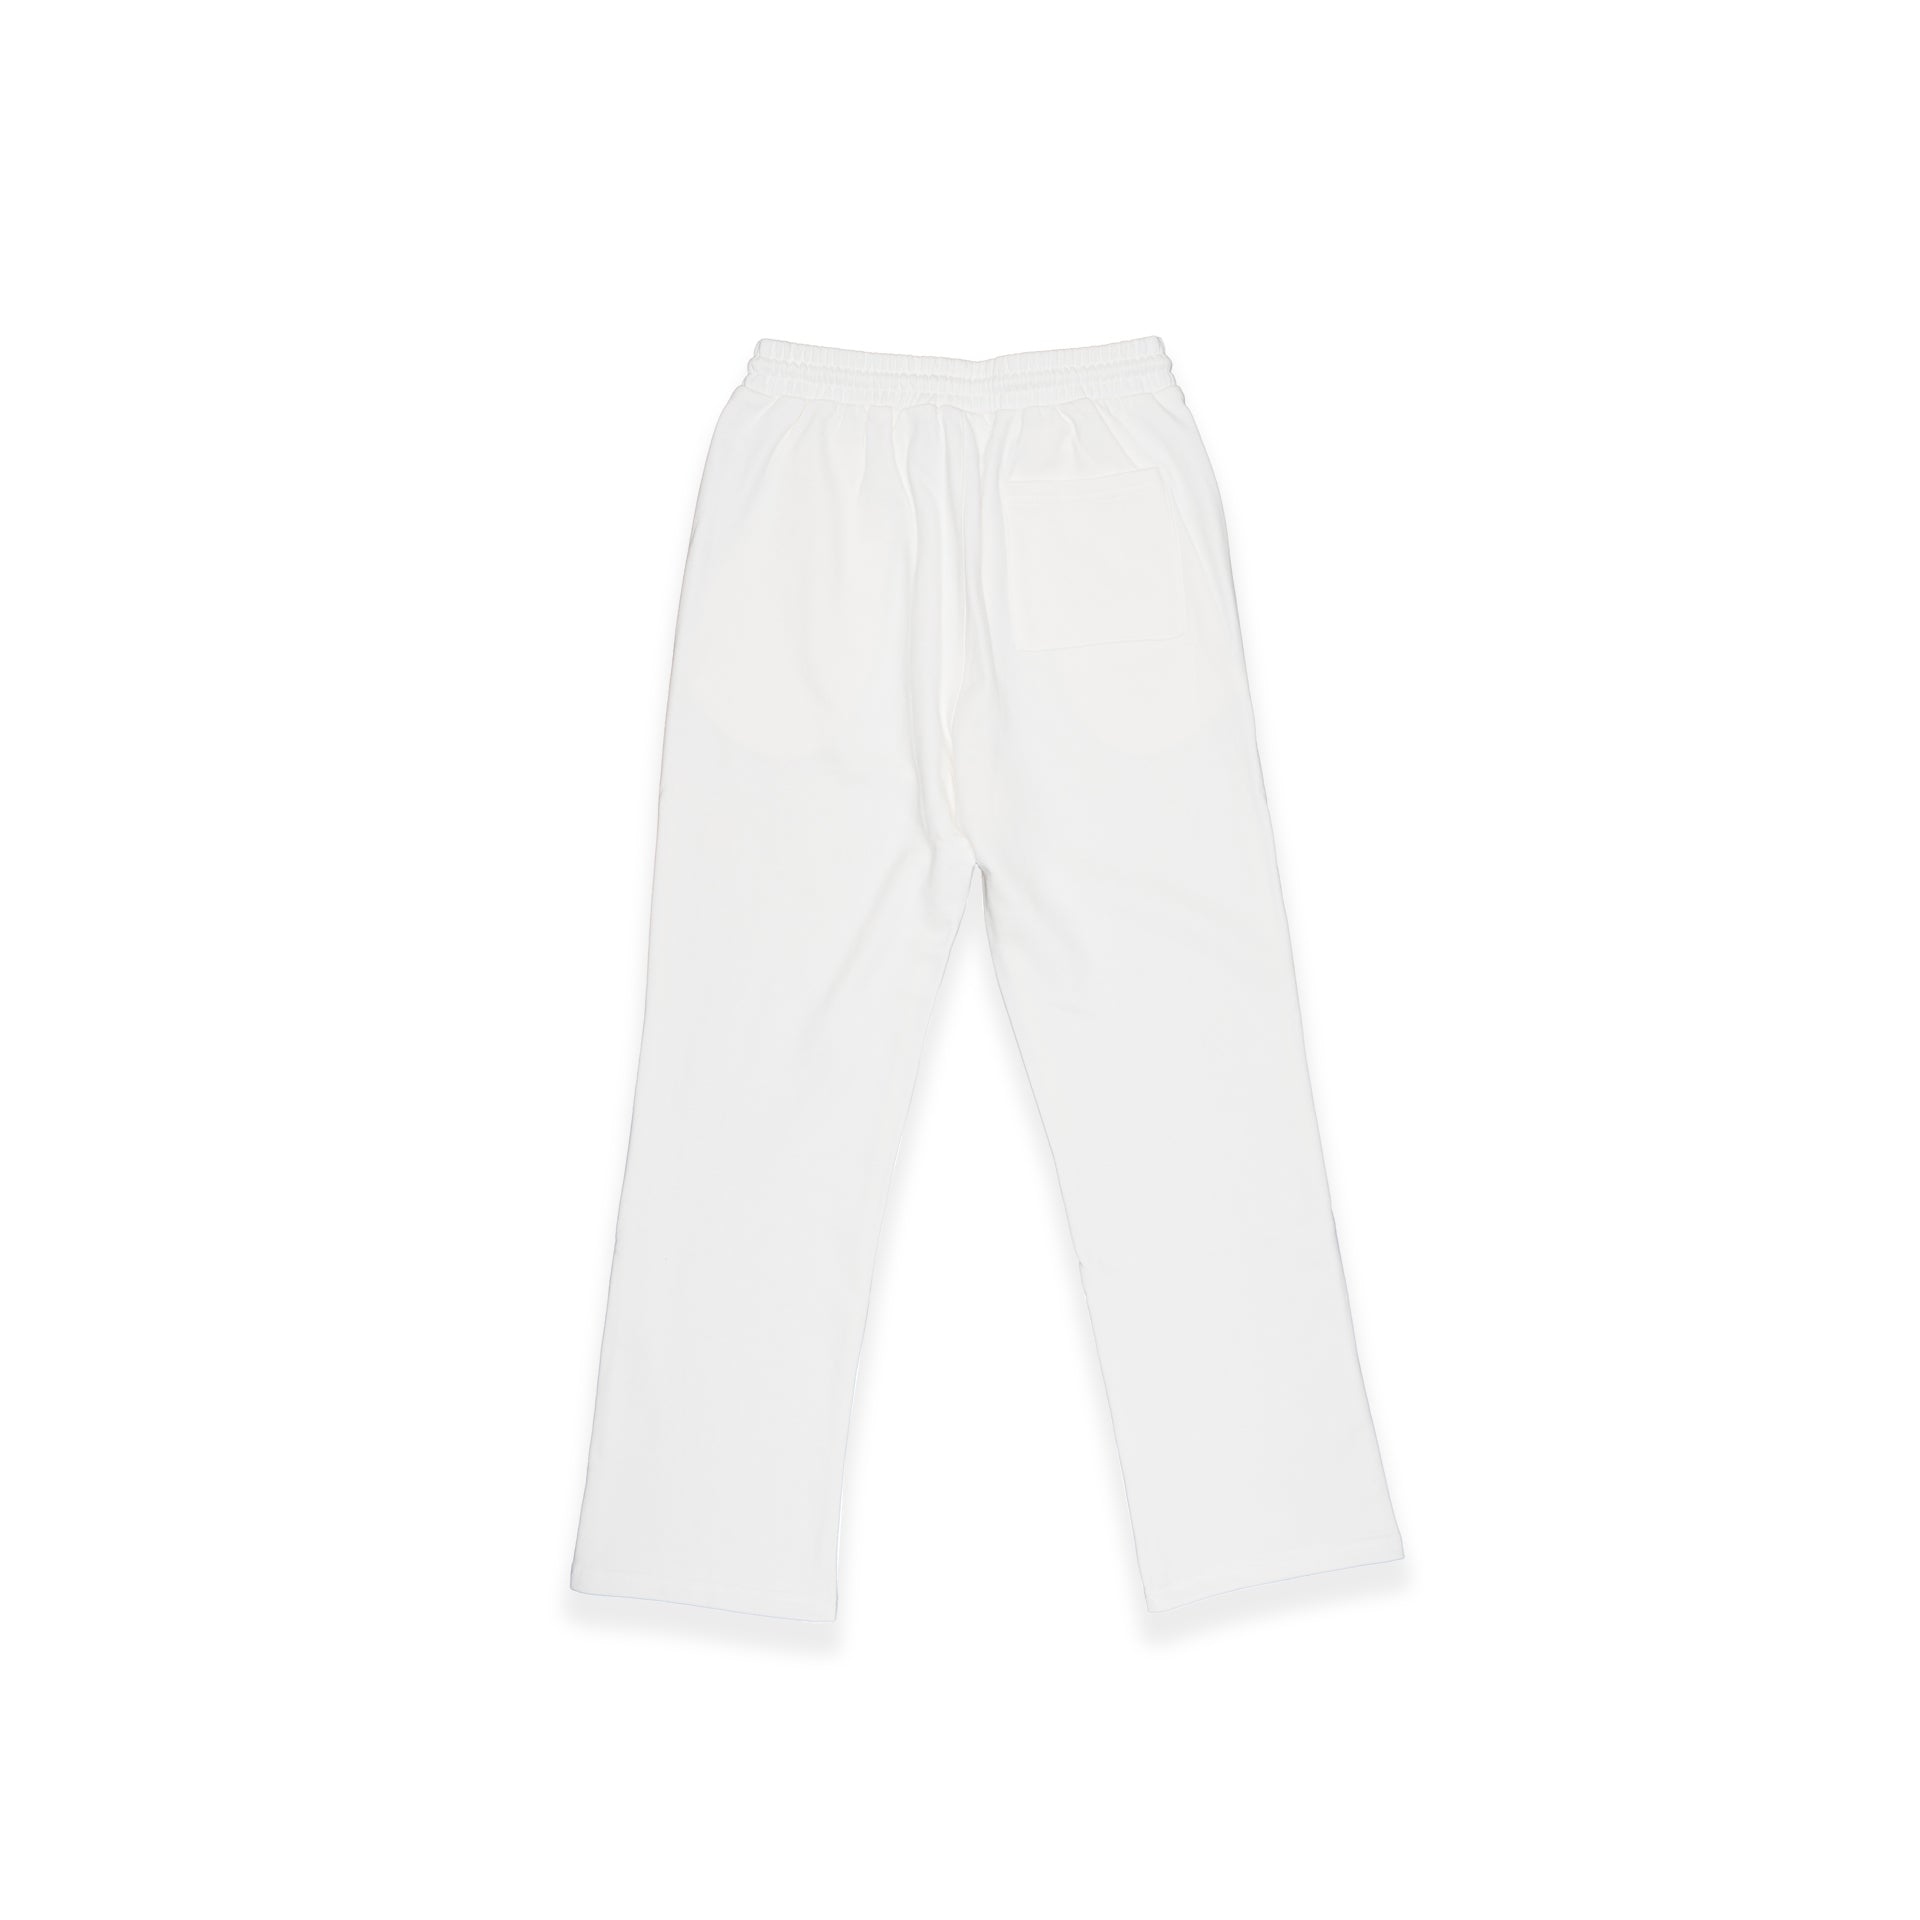 White Cotton Sweatpants by Brandtionary